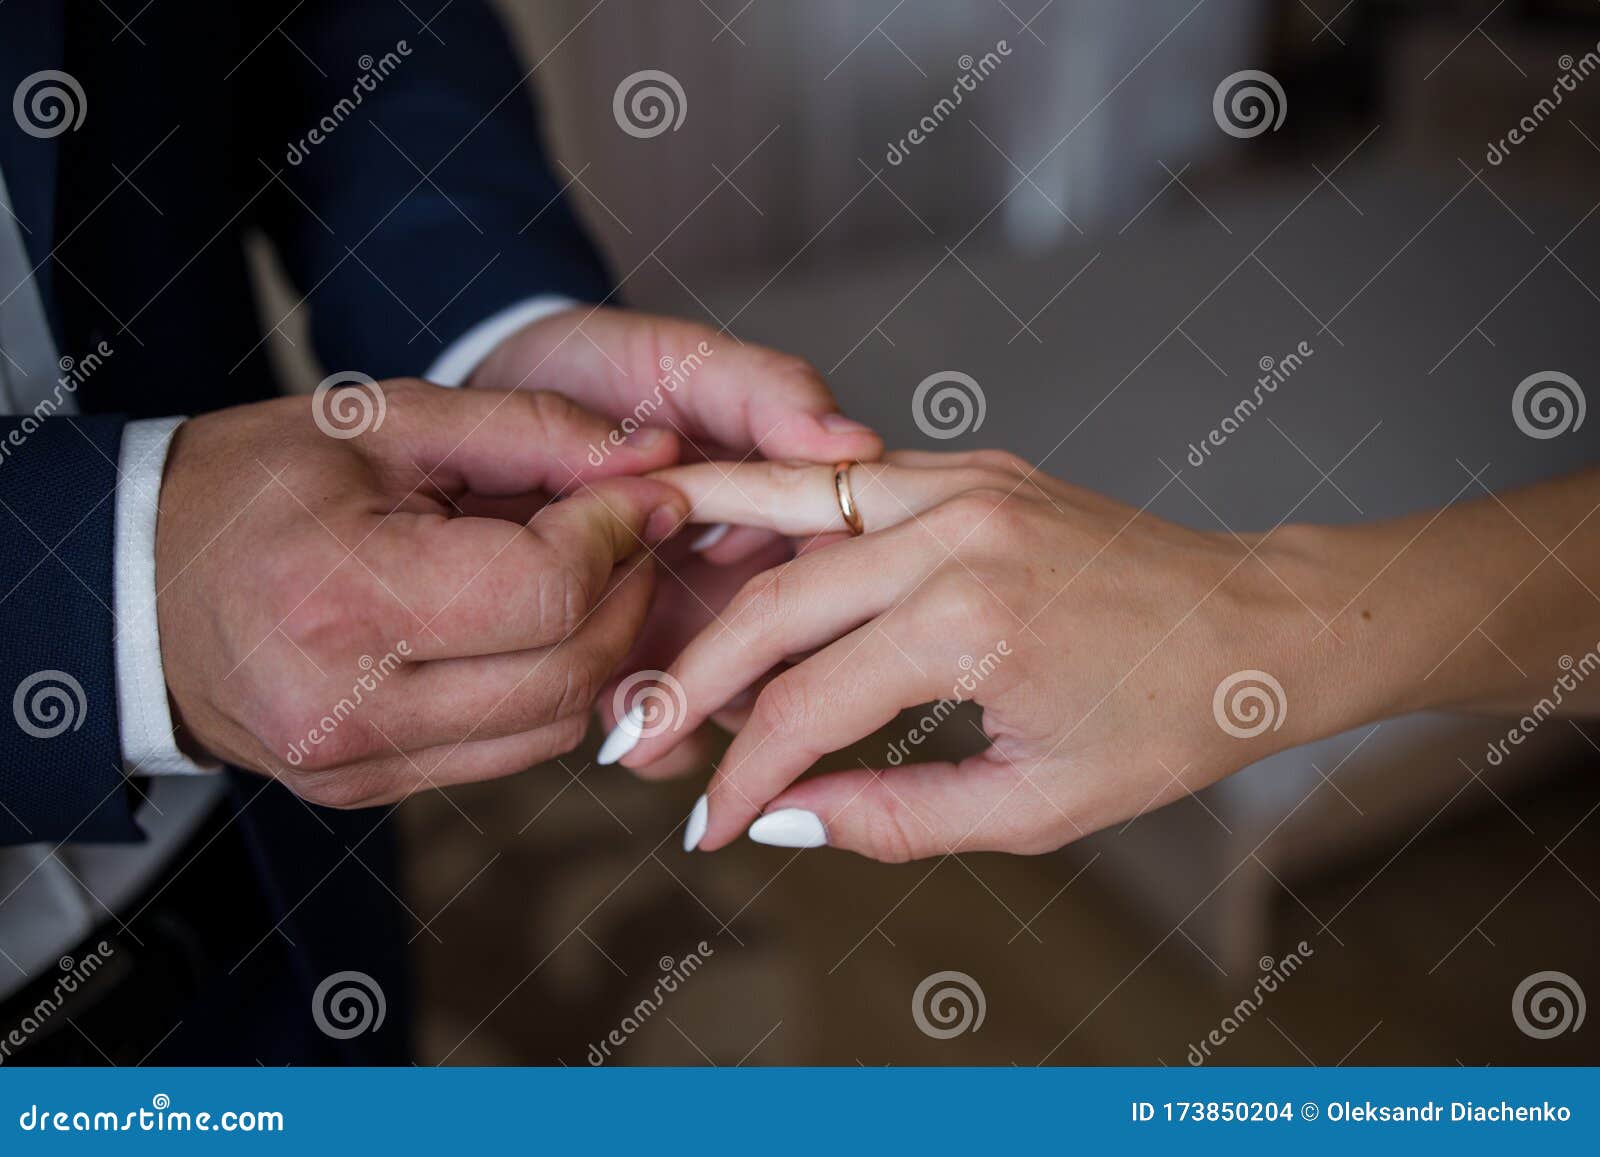 Groom Puts Wedding Ring His Finger Groom Puts Wedding Ring His Finger To Bride Ceremony 173850204 